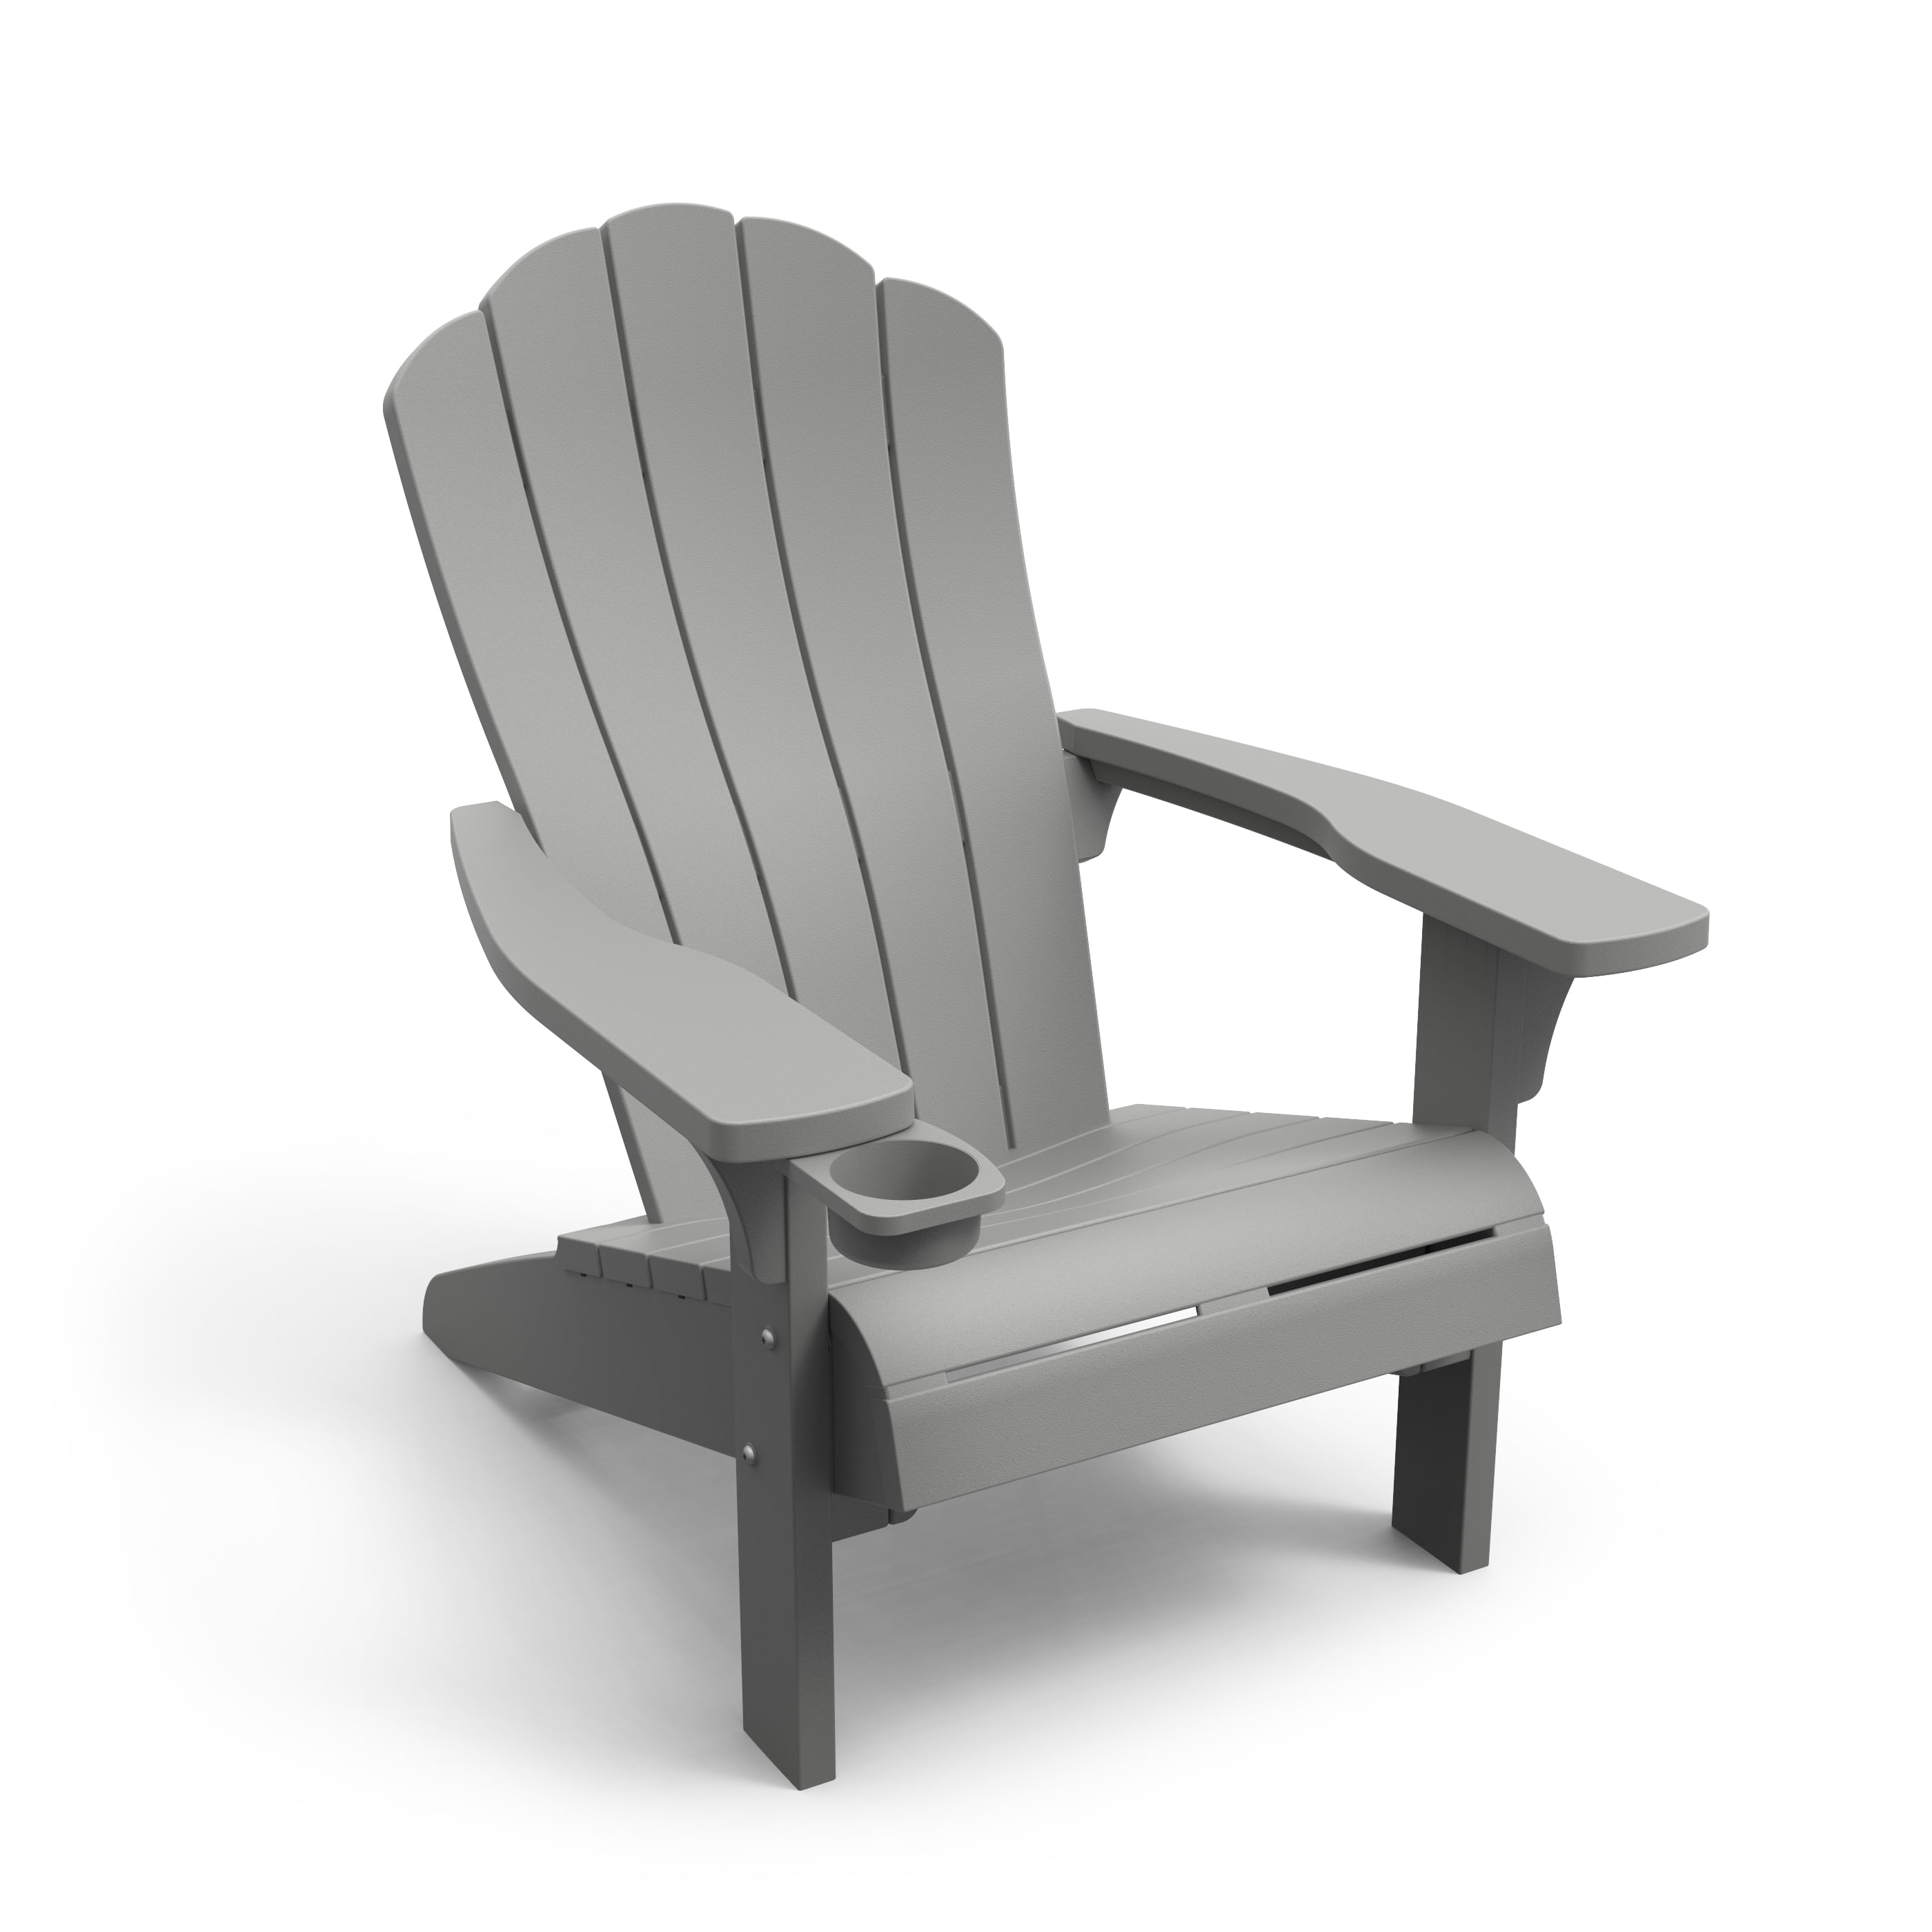 Keter Adirondack Chair, Resin Outdoor Furniture, Gray - Walmart.com